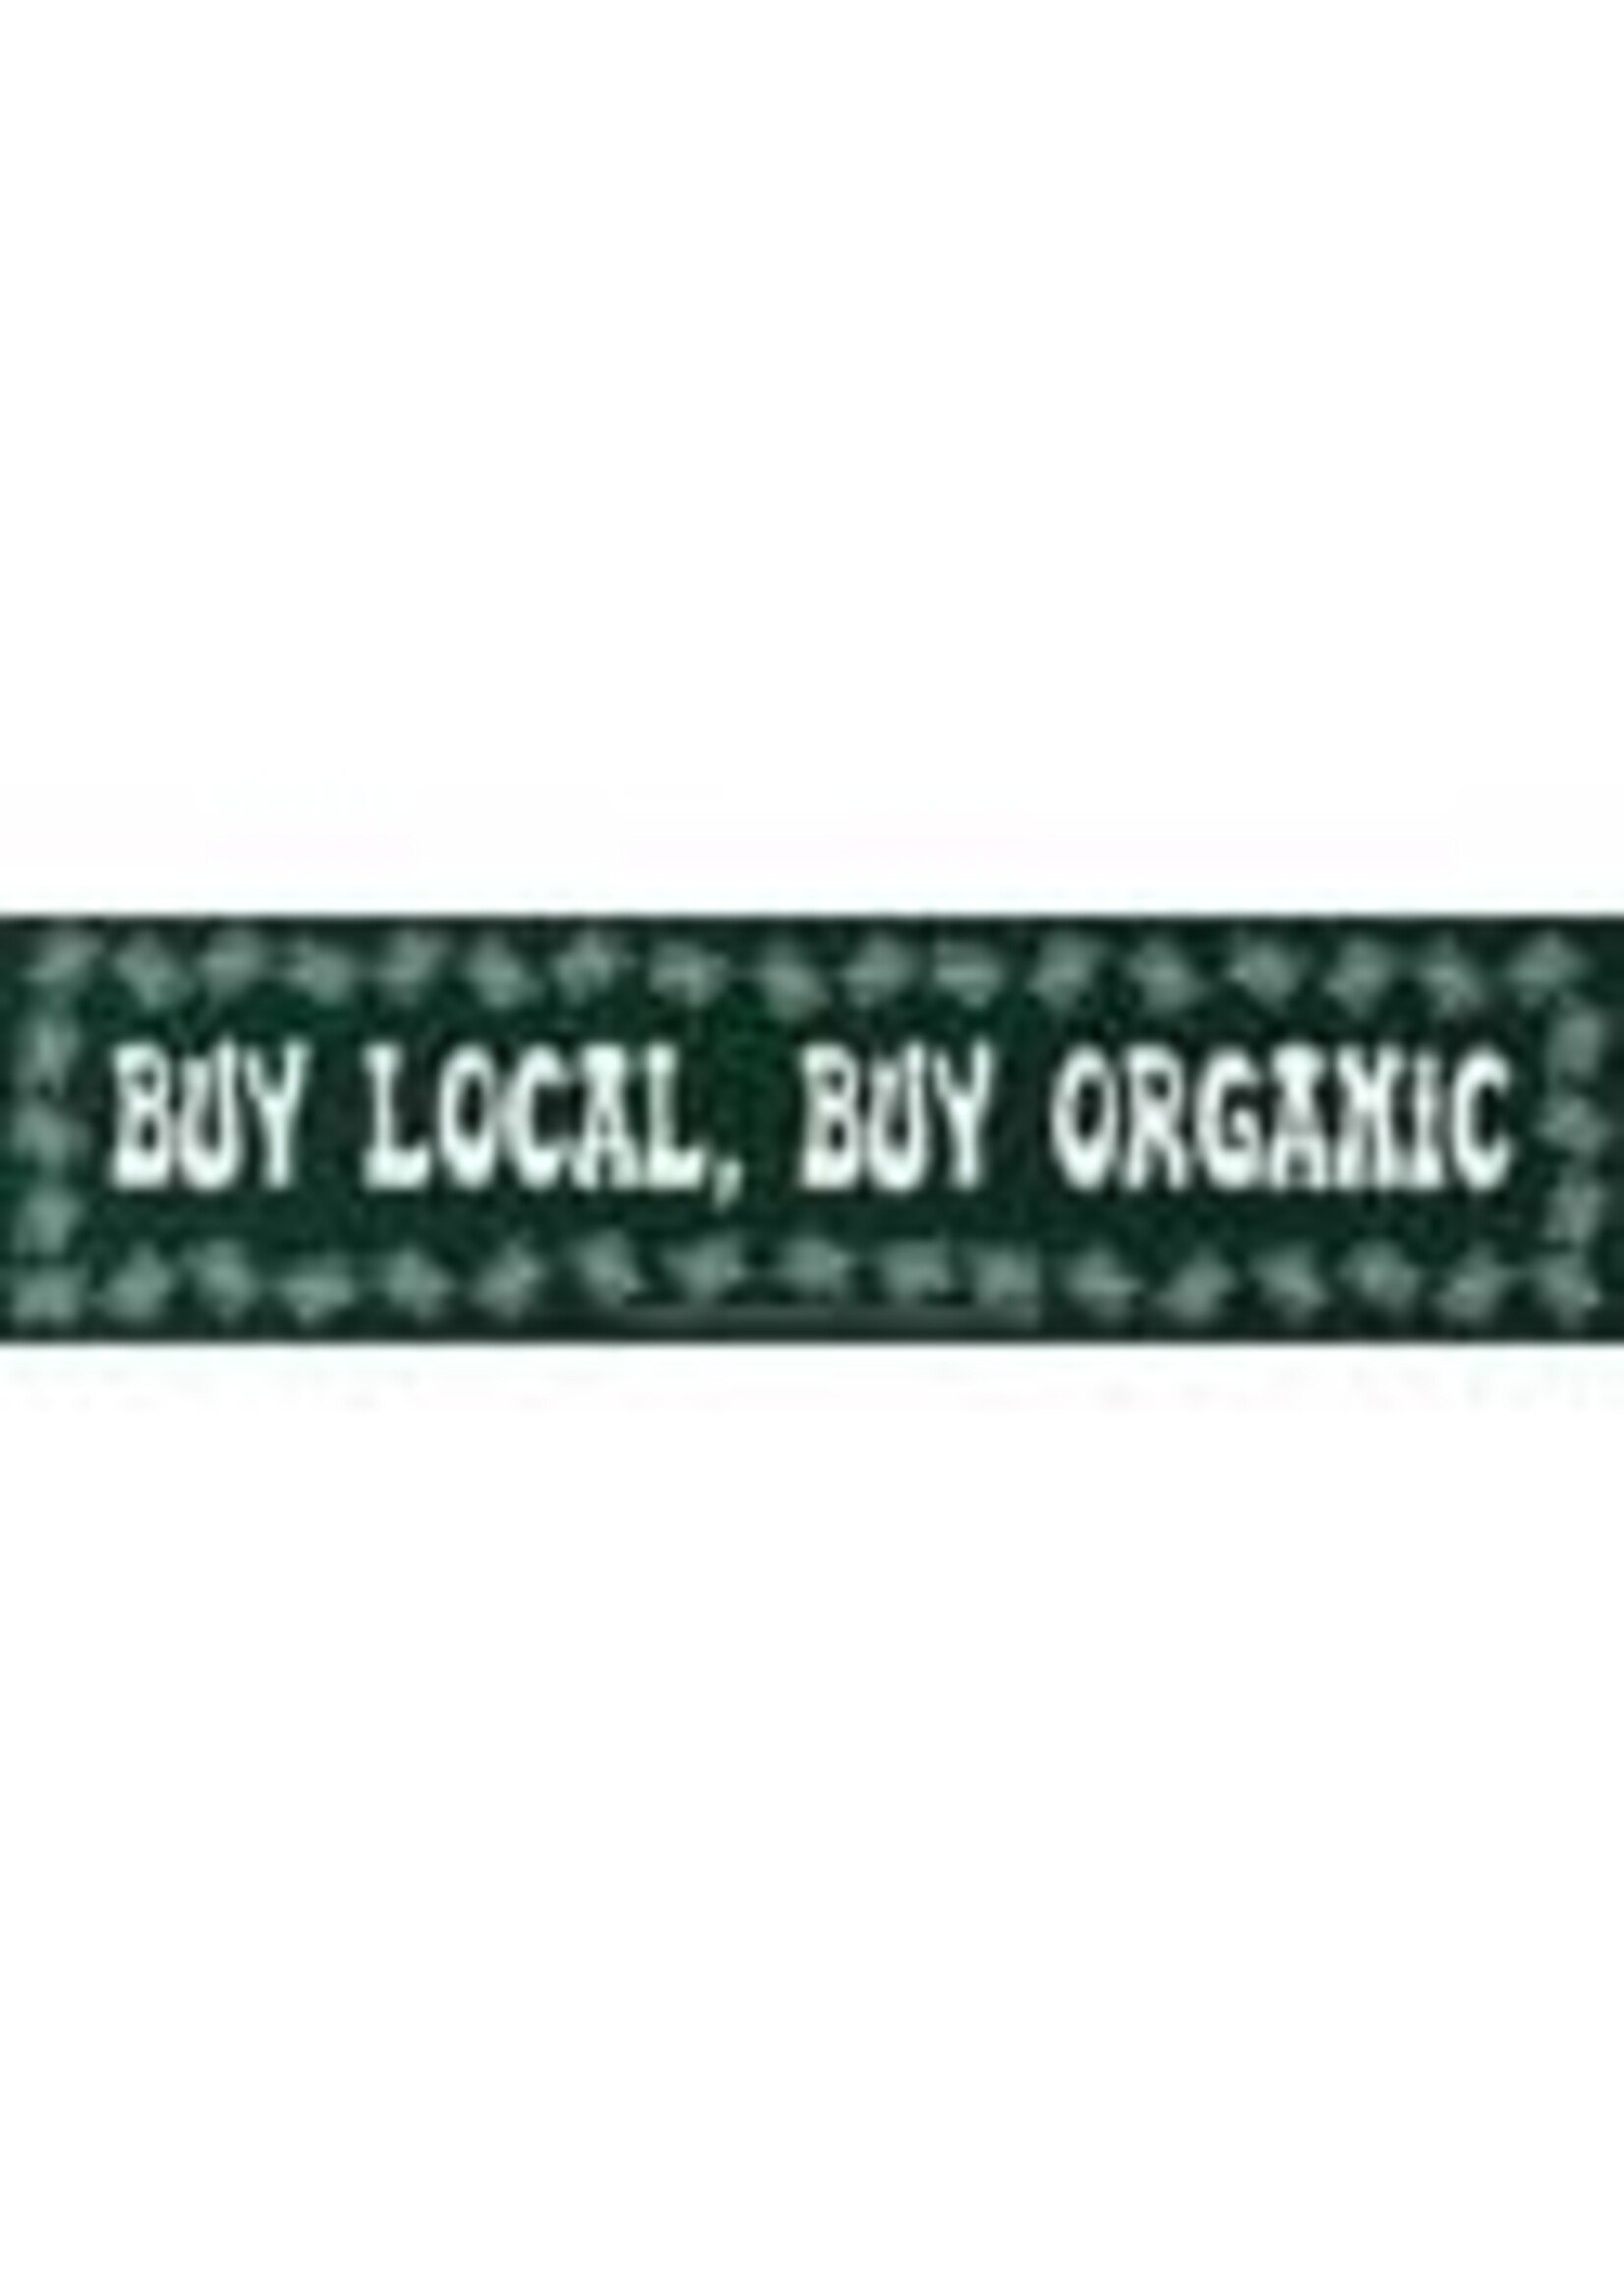 BUMP: Buy Local Buy Organic (023)